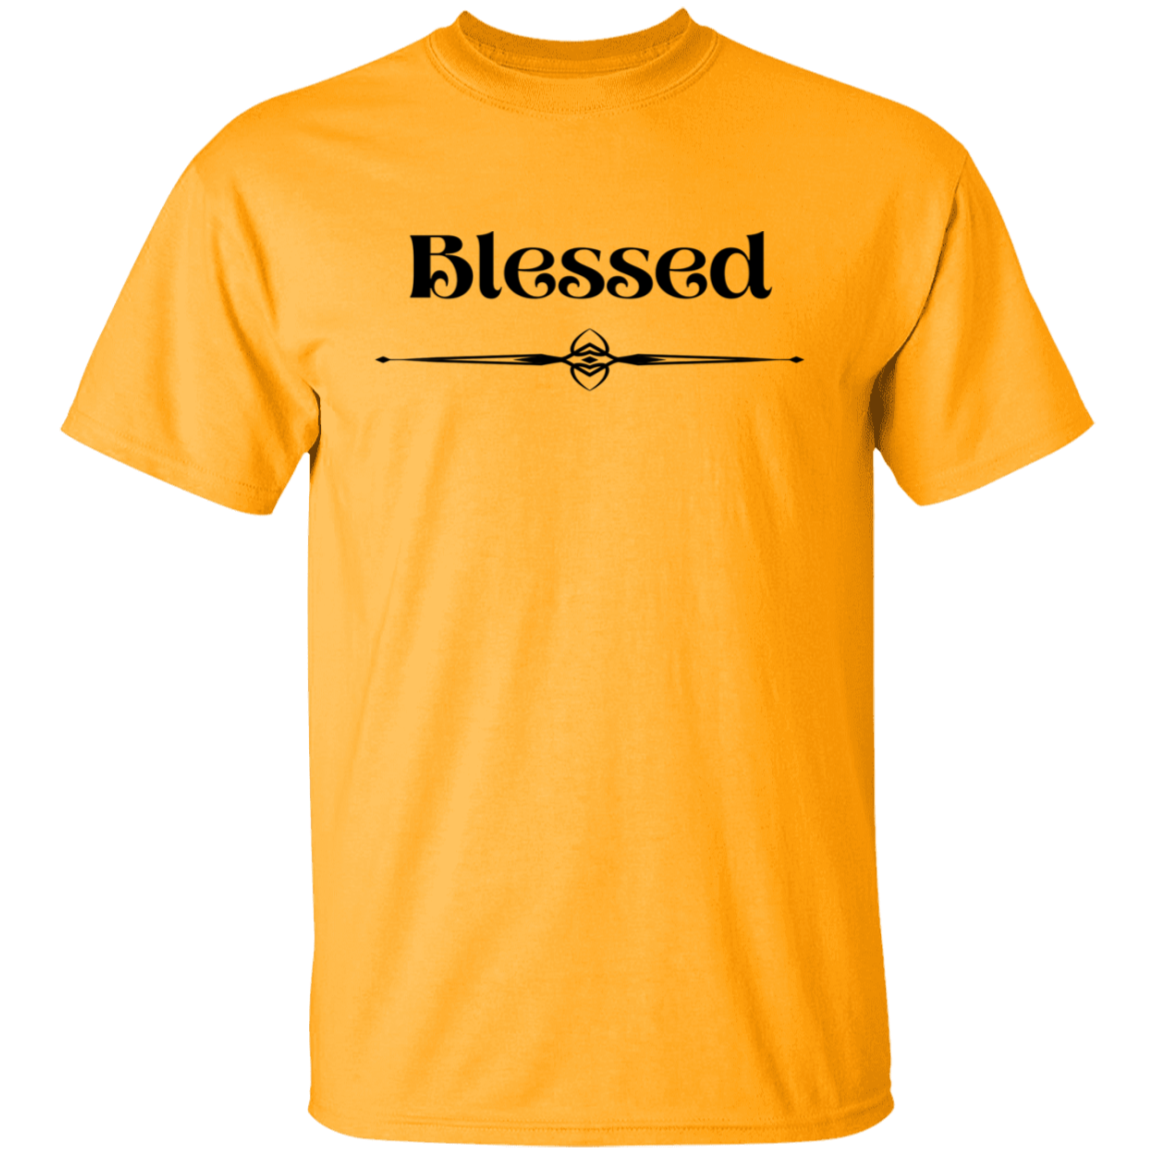 Blessed TShirt - UNISEX